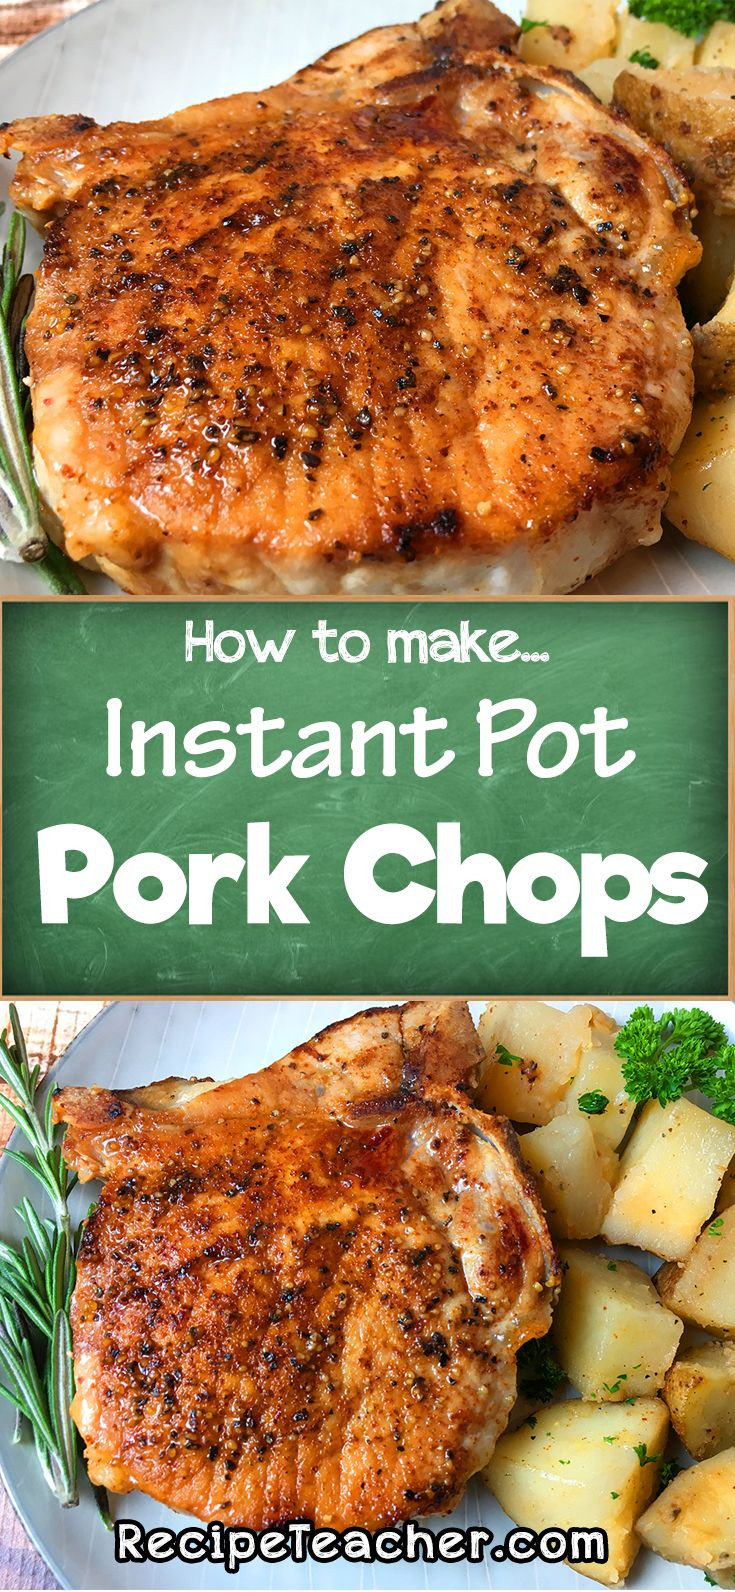 Stuffed Pork Chops Instant Pot
 The 25 best Pork chop recipes ideas on Pinterest